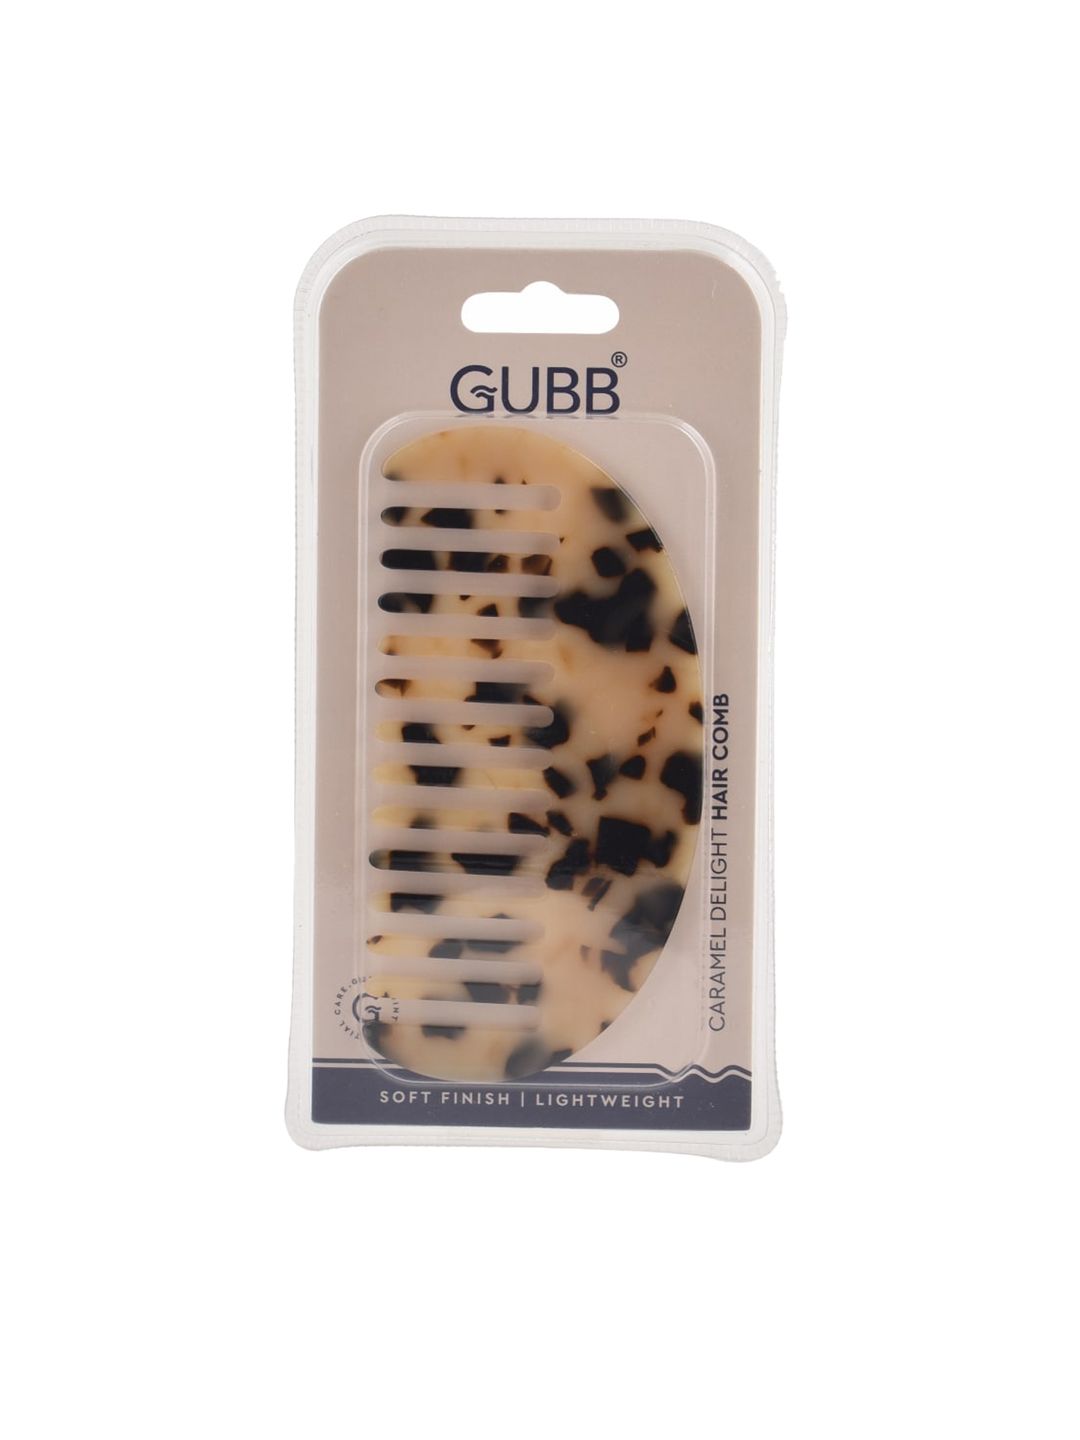 GUBB Multicolored Caramel Delight Hair Comb Price in India